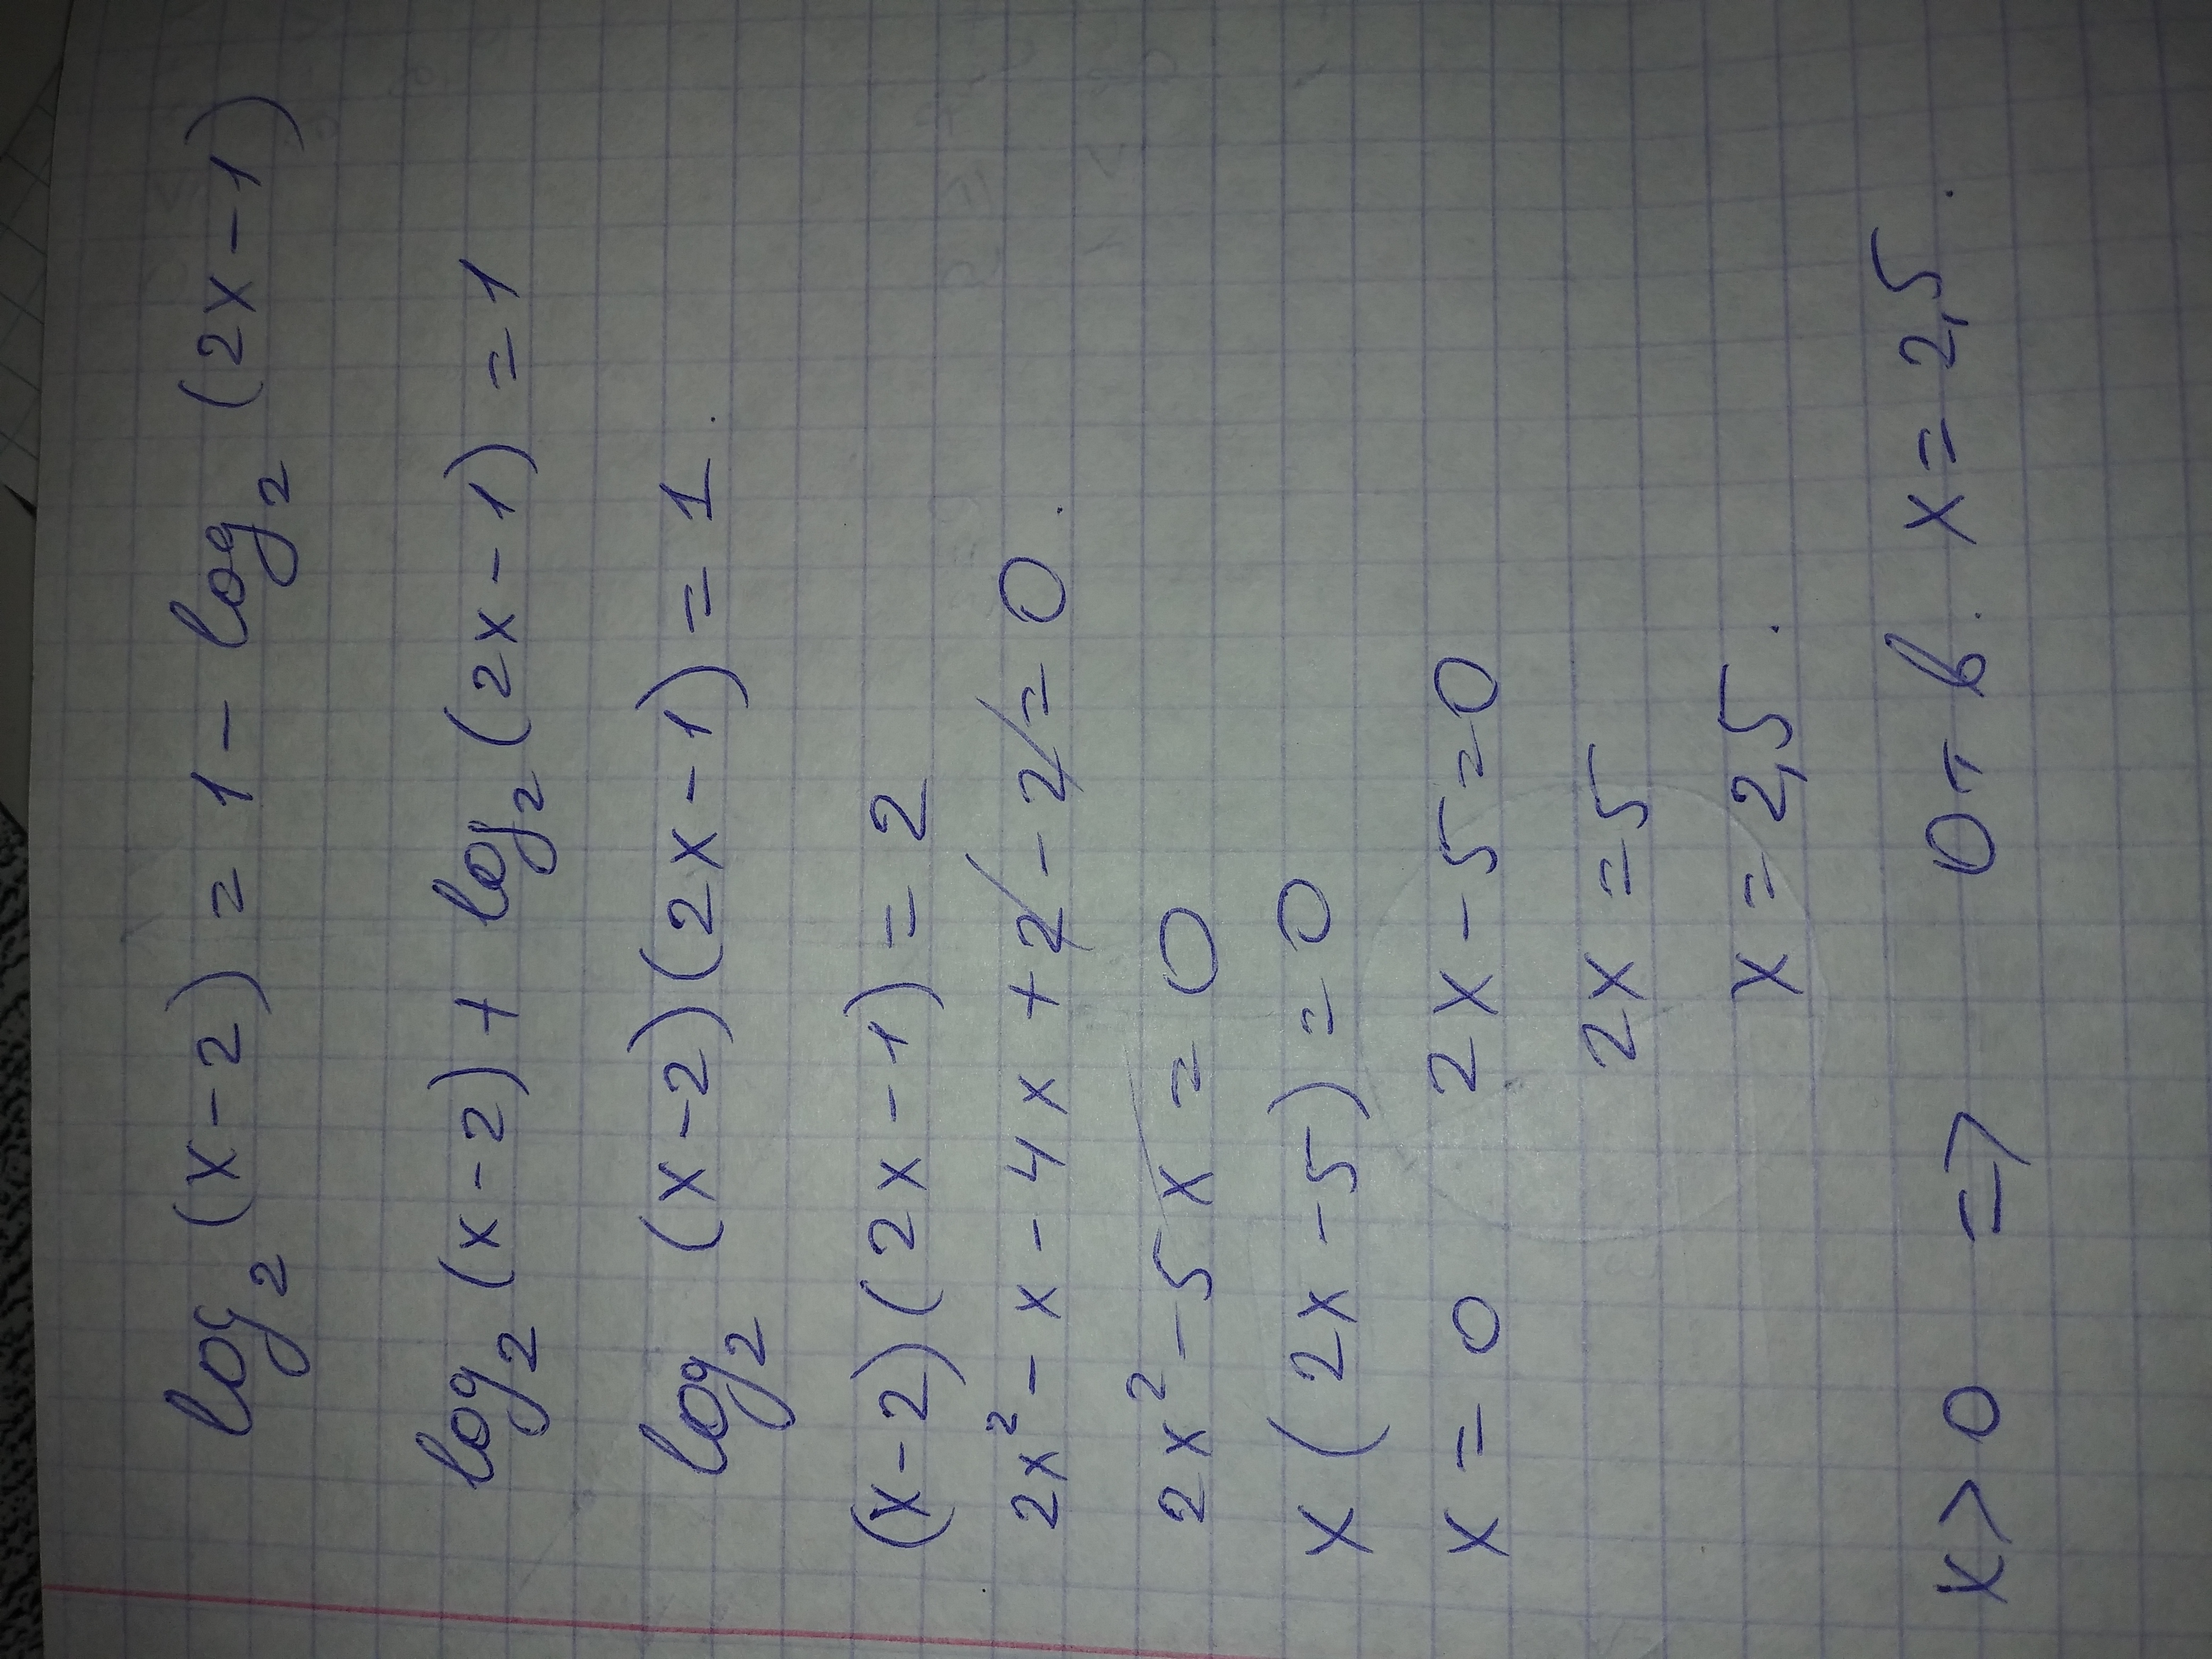 Log 2 x 2 log2x. Log2 2/x-1 log2 x. 2log2 1-2x -log 1/x-2. Log2^(x+1)^2-1(log2x^2+2x+3(x^2-2x)). Log x-1 1/2 >1/2.